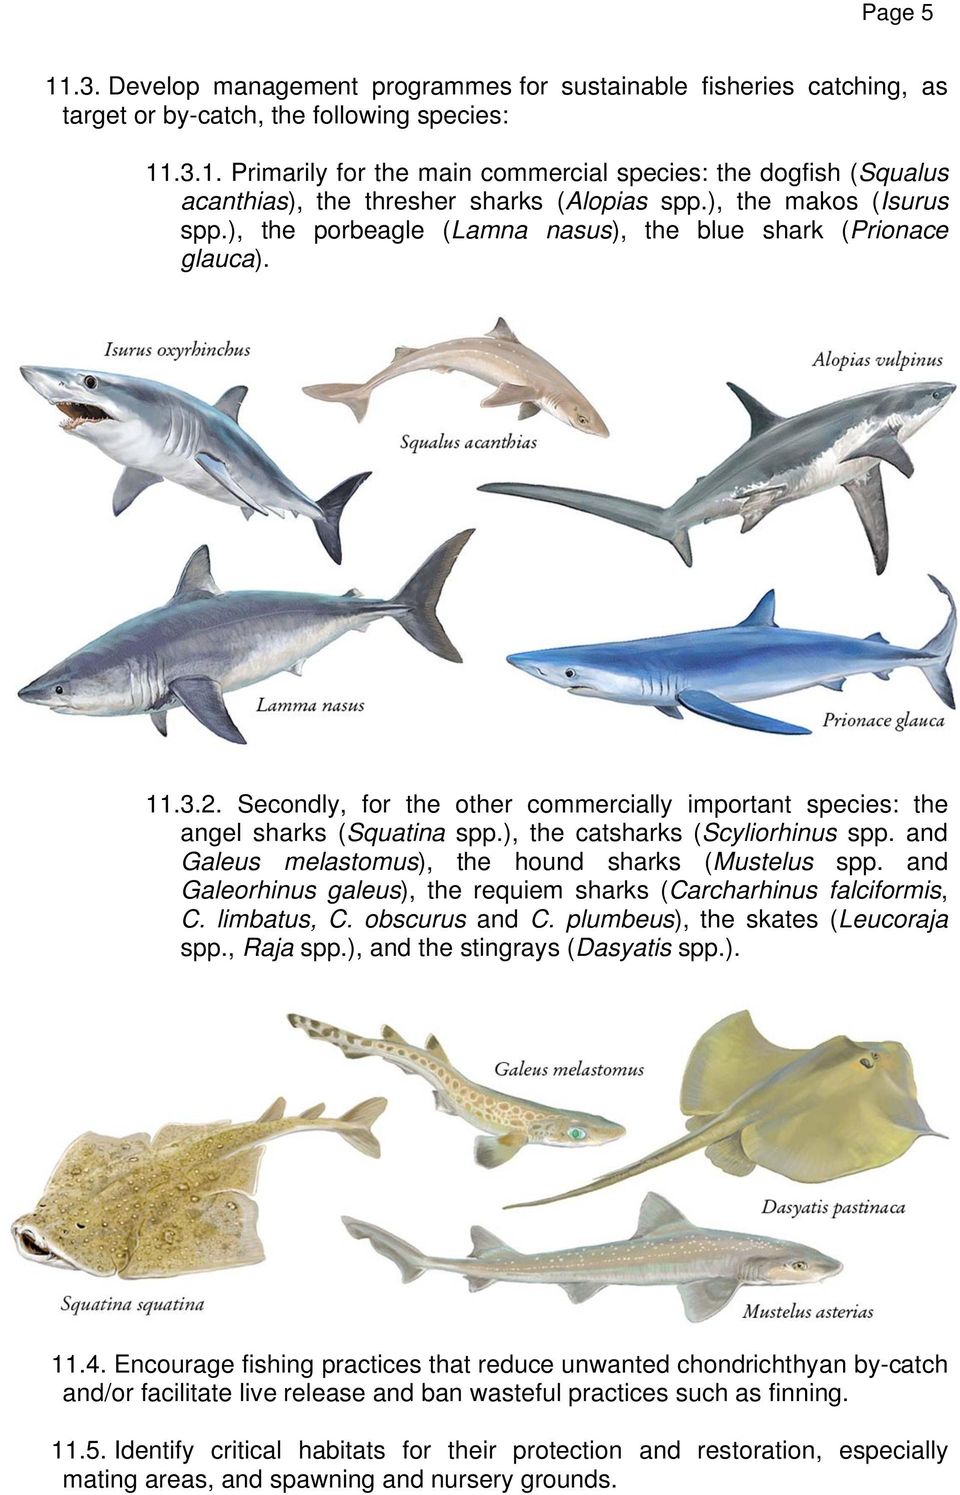 ), the catsharks (Scyliorhinus spp. and Galeus melastomus), the hound sharks (Mustelus spp. and Galeorhinus galeus), the requiem sharks (Carcharhinus falciformis, C. limbatus, C. obscurus and C.